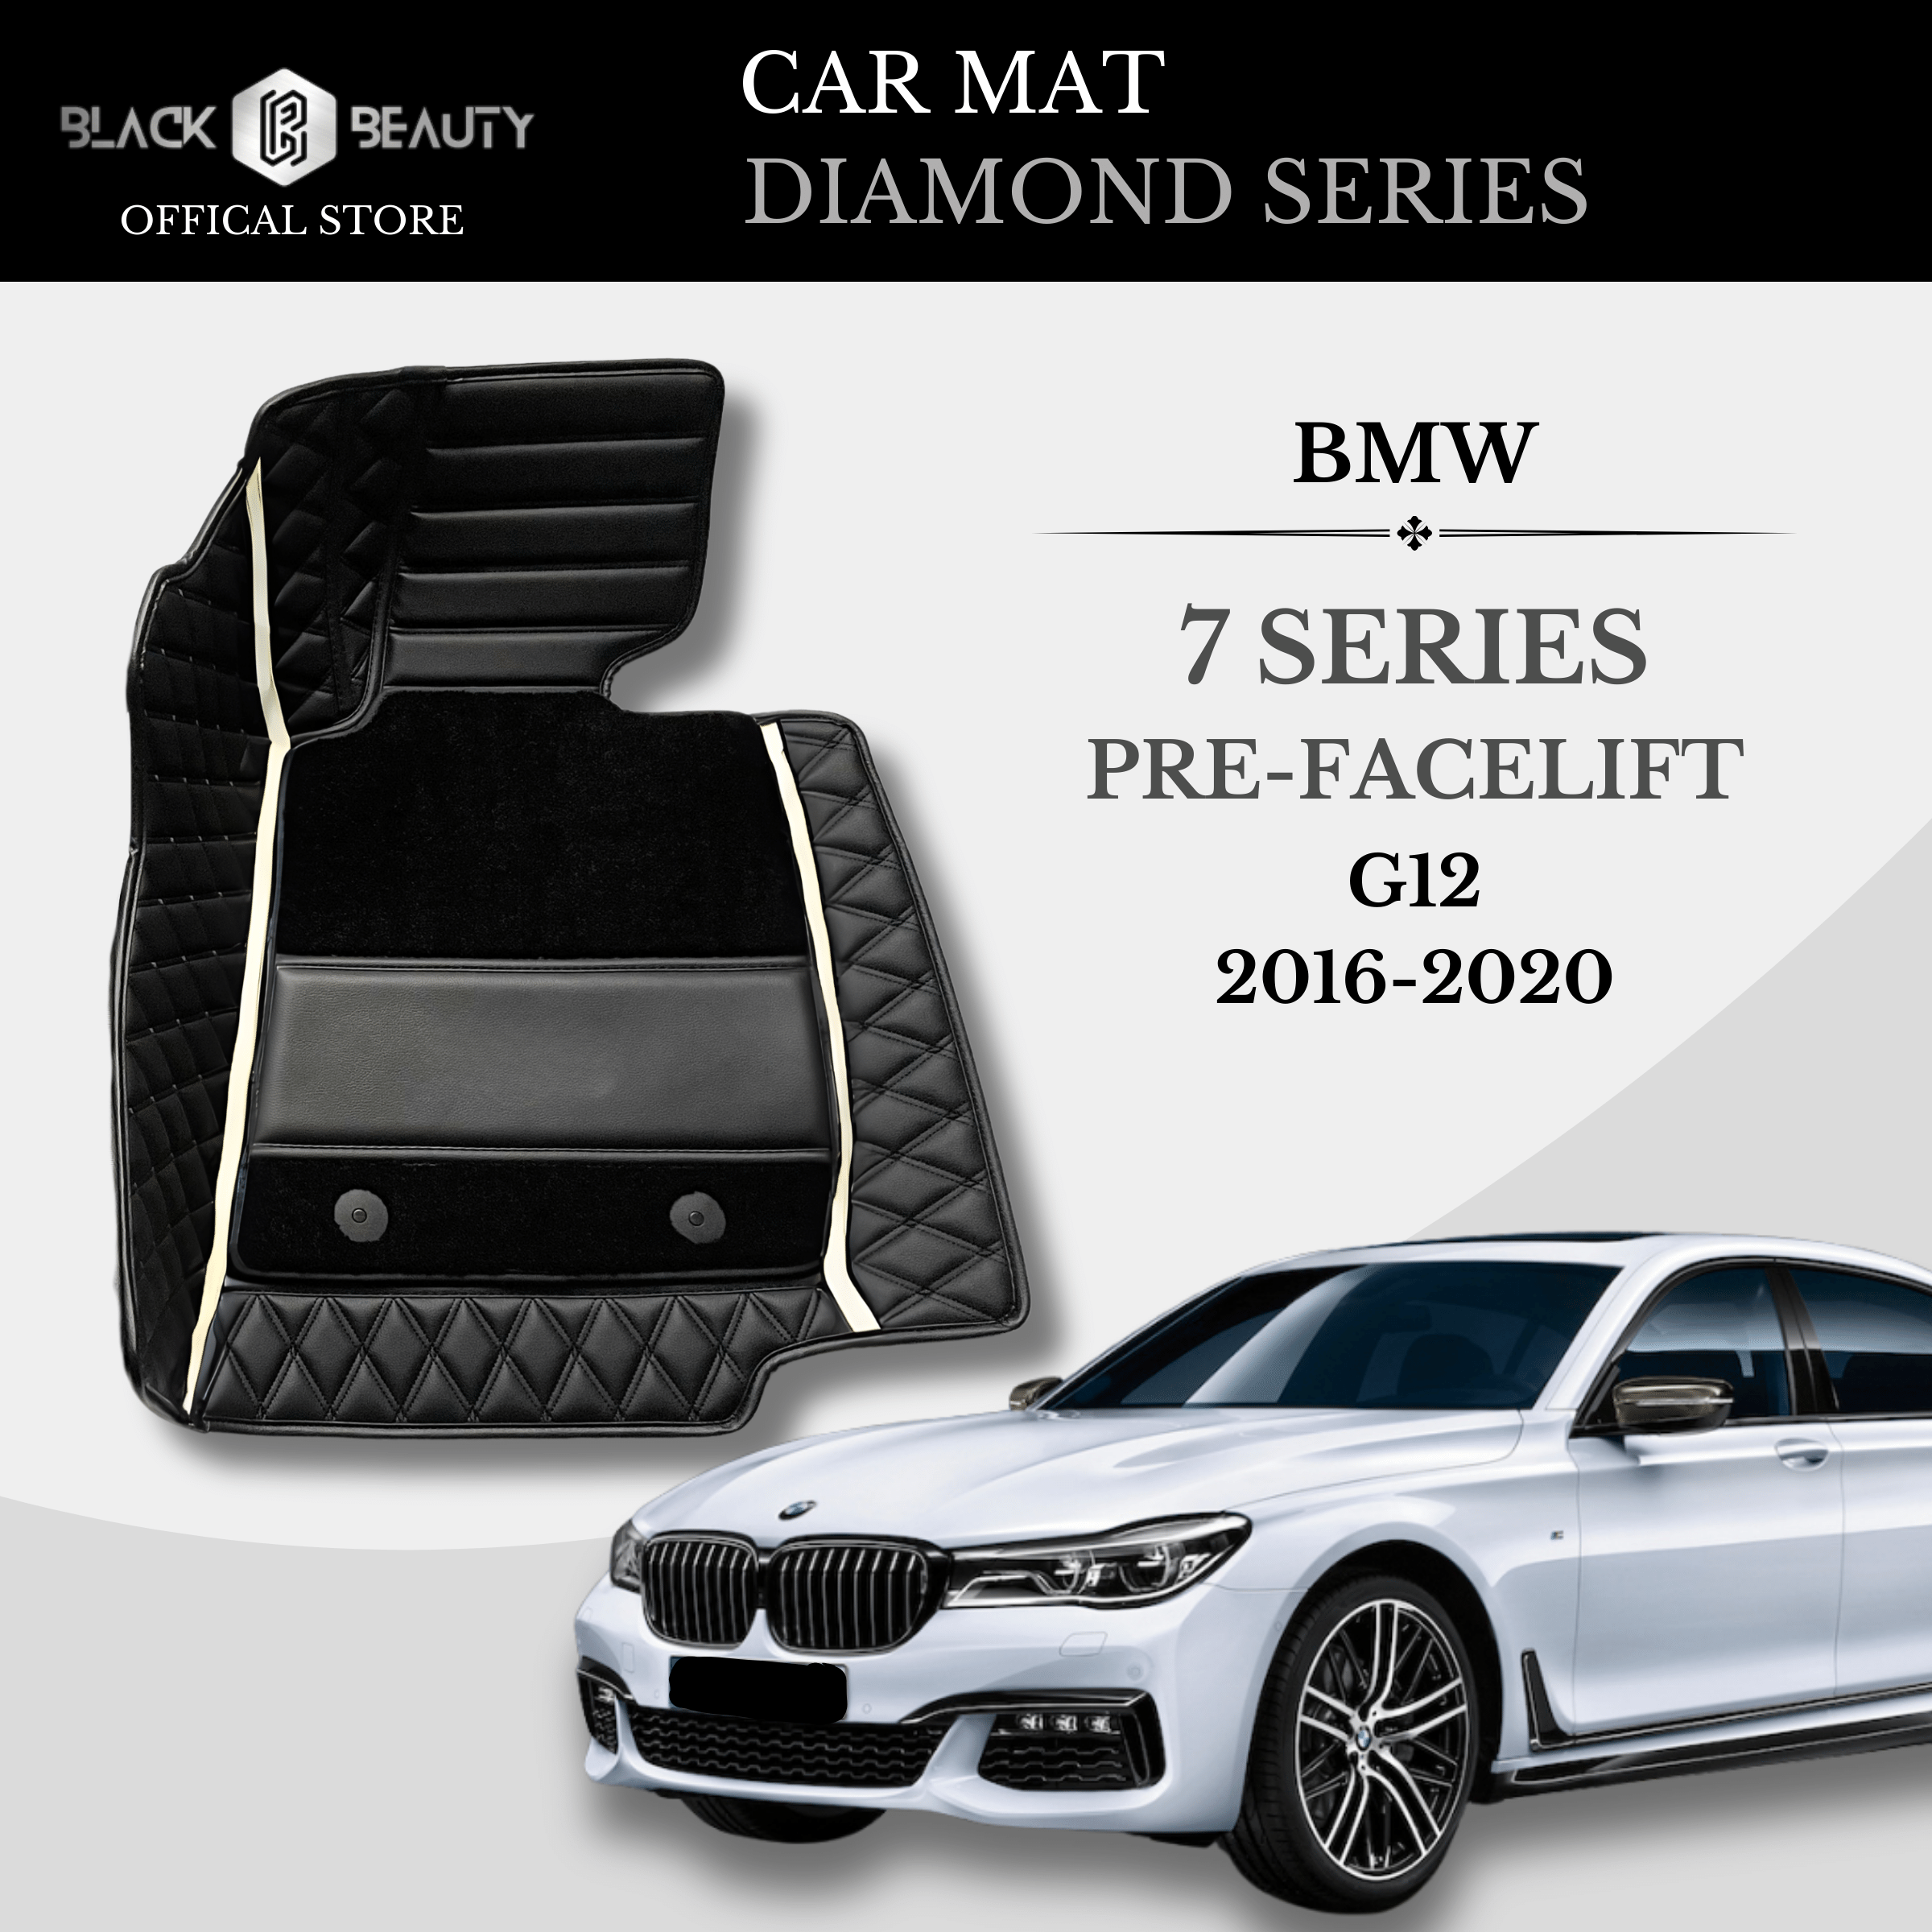 BMW 7 Series Pre-Facelift G12 (2016-2020) - Diamond Series Car Mat